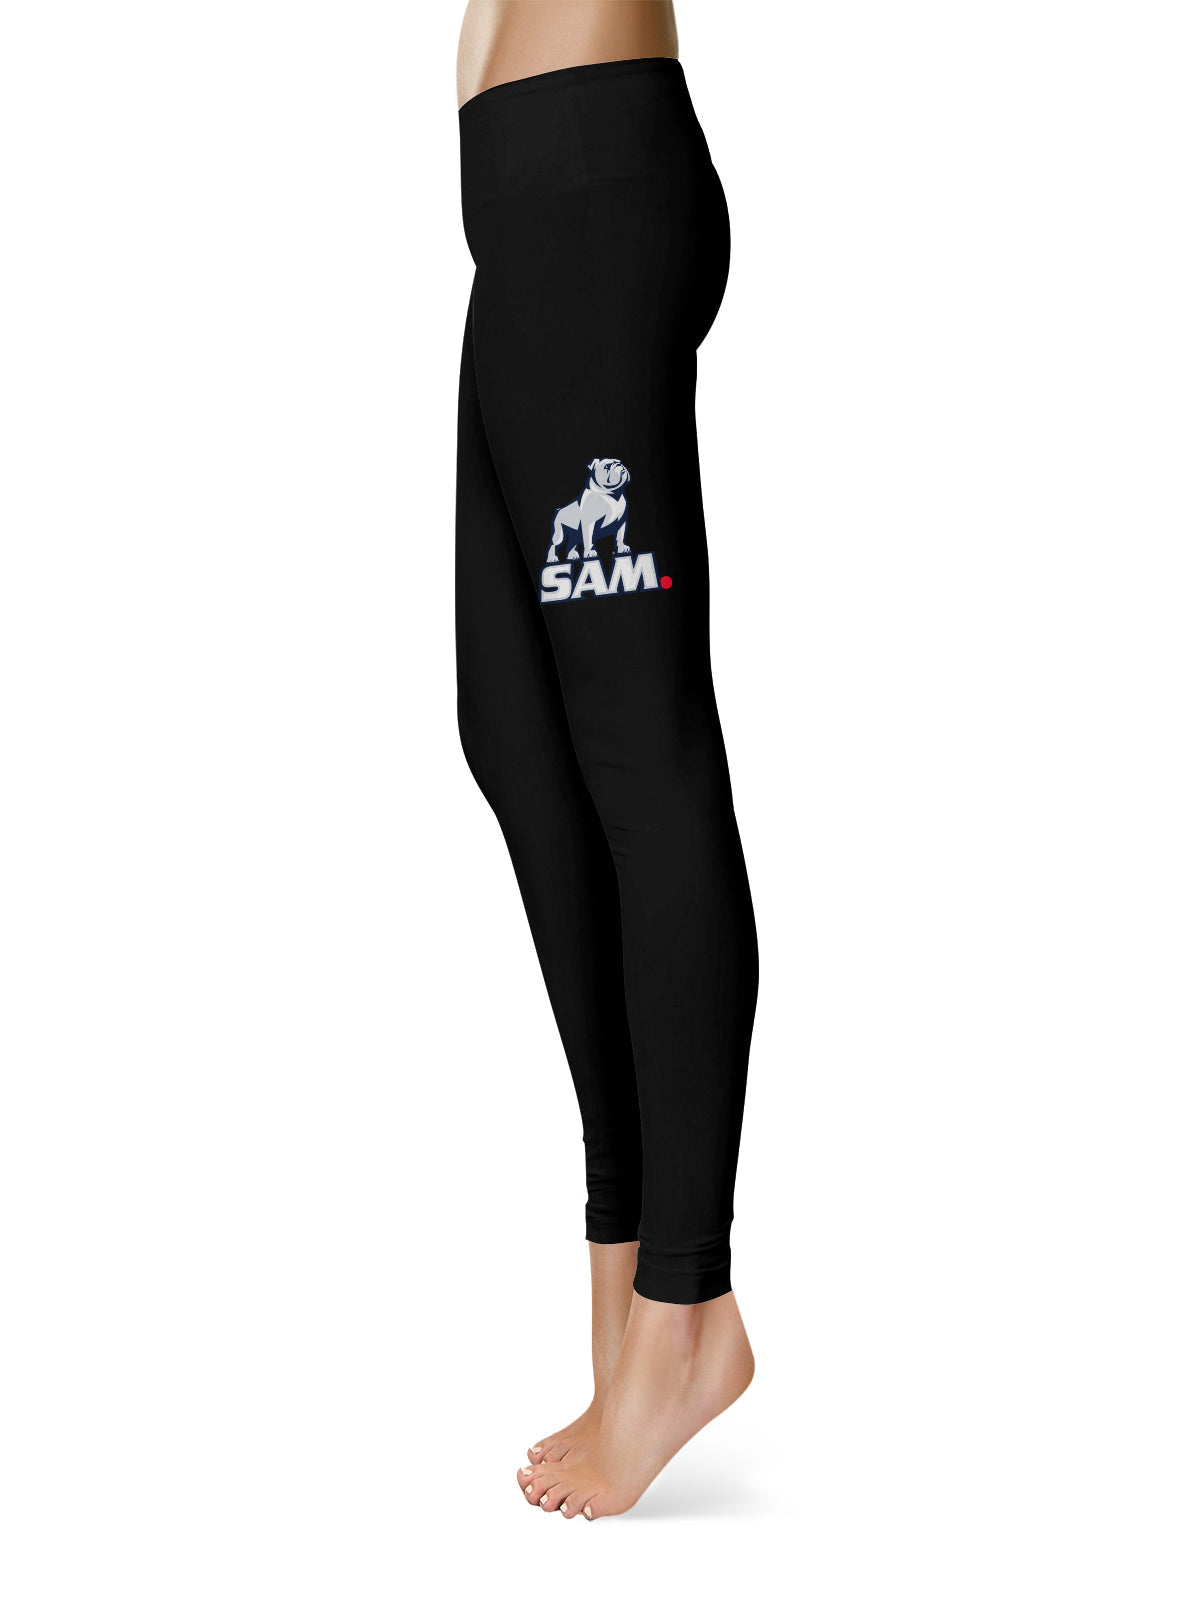 Samford Bulldogs Vive La Fete Game Day Collegiate Large Logo on Thigh Women Black Yoga Leggings 2.5 Waist Tights